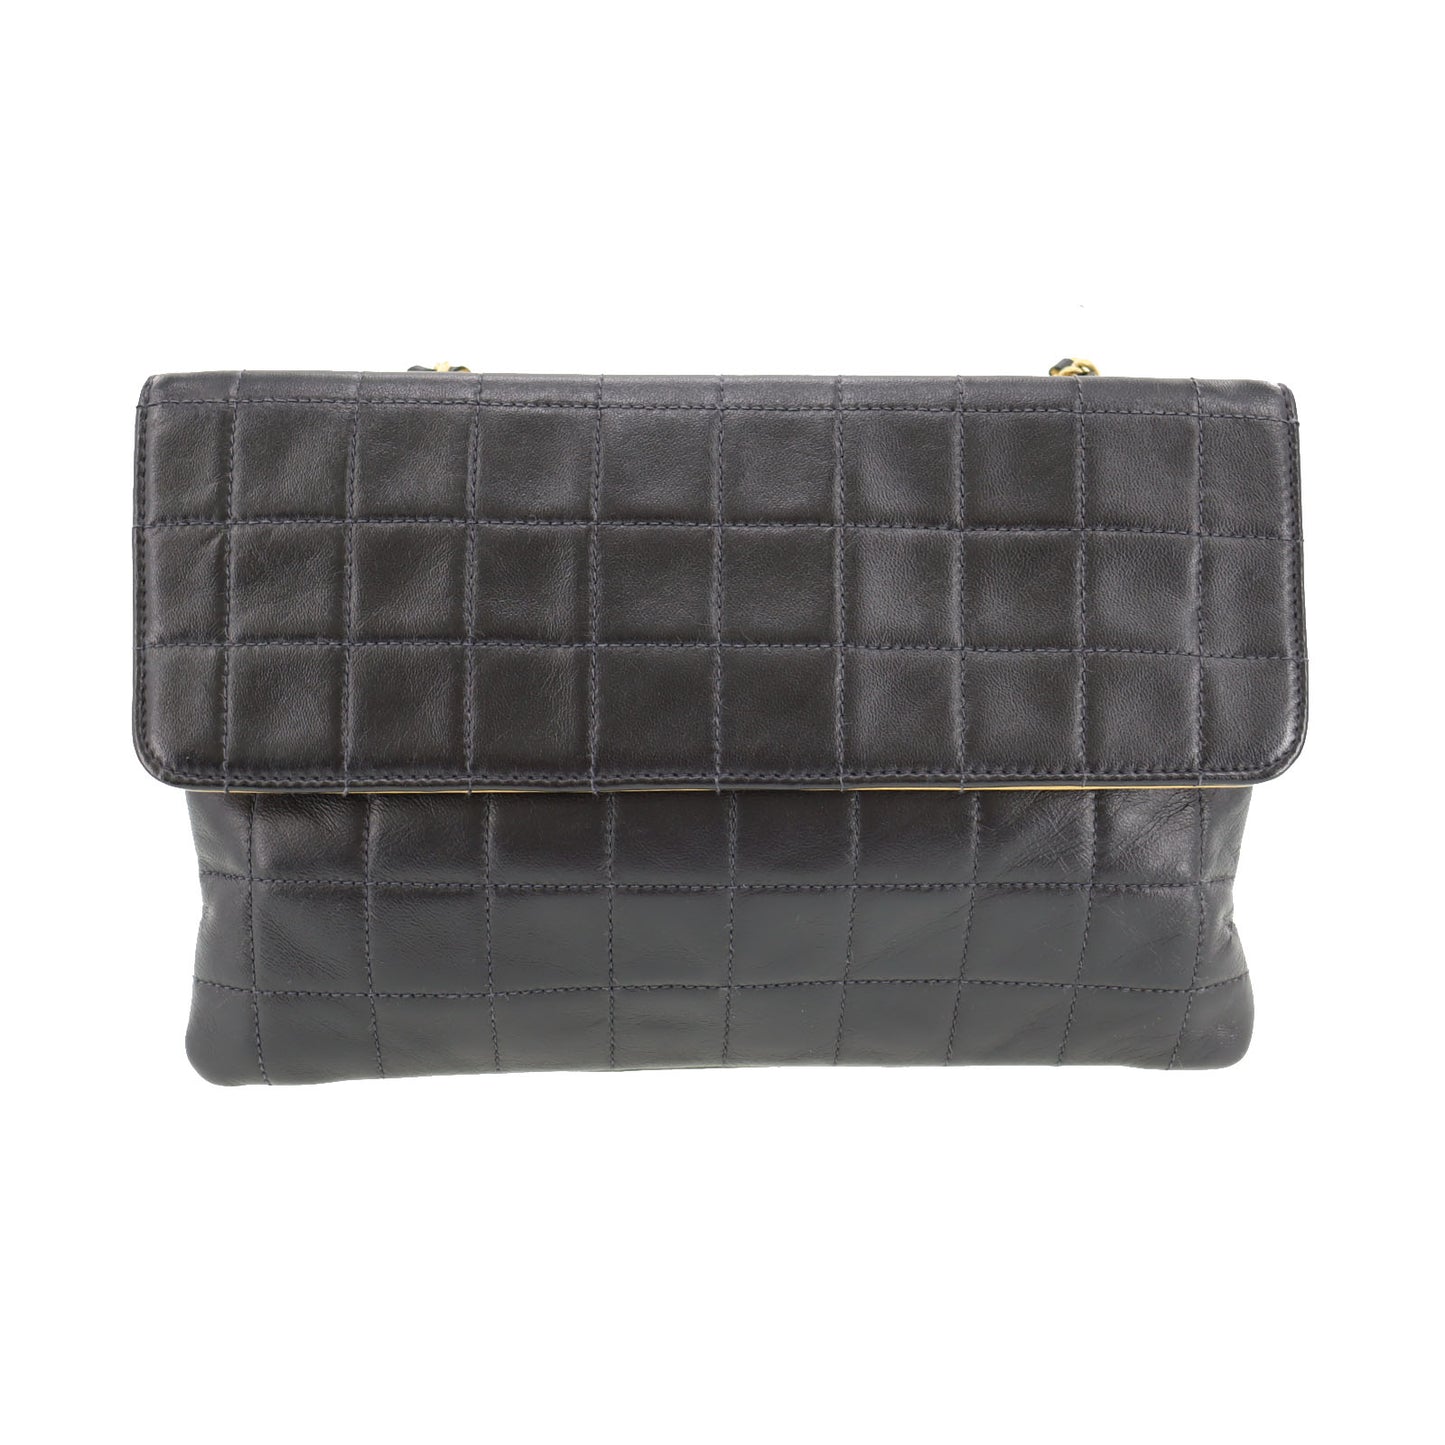 CHANEL Chocolate Bar Used Handbag Beige Black Leather Vintage #AH448 S